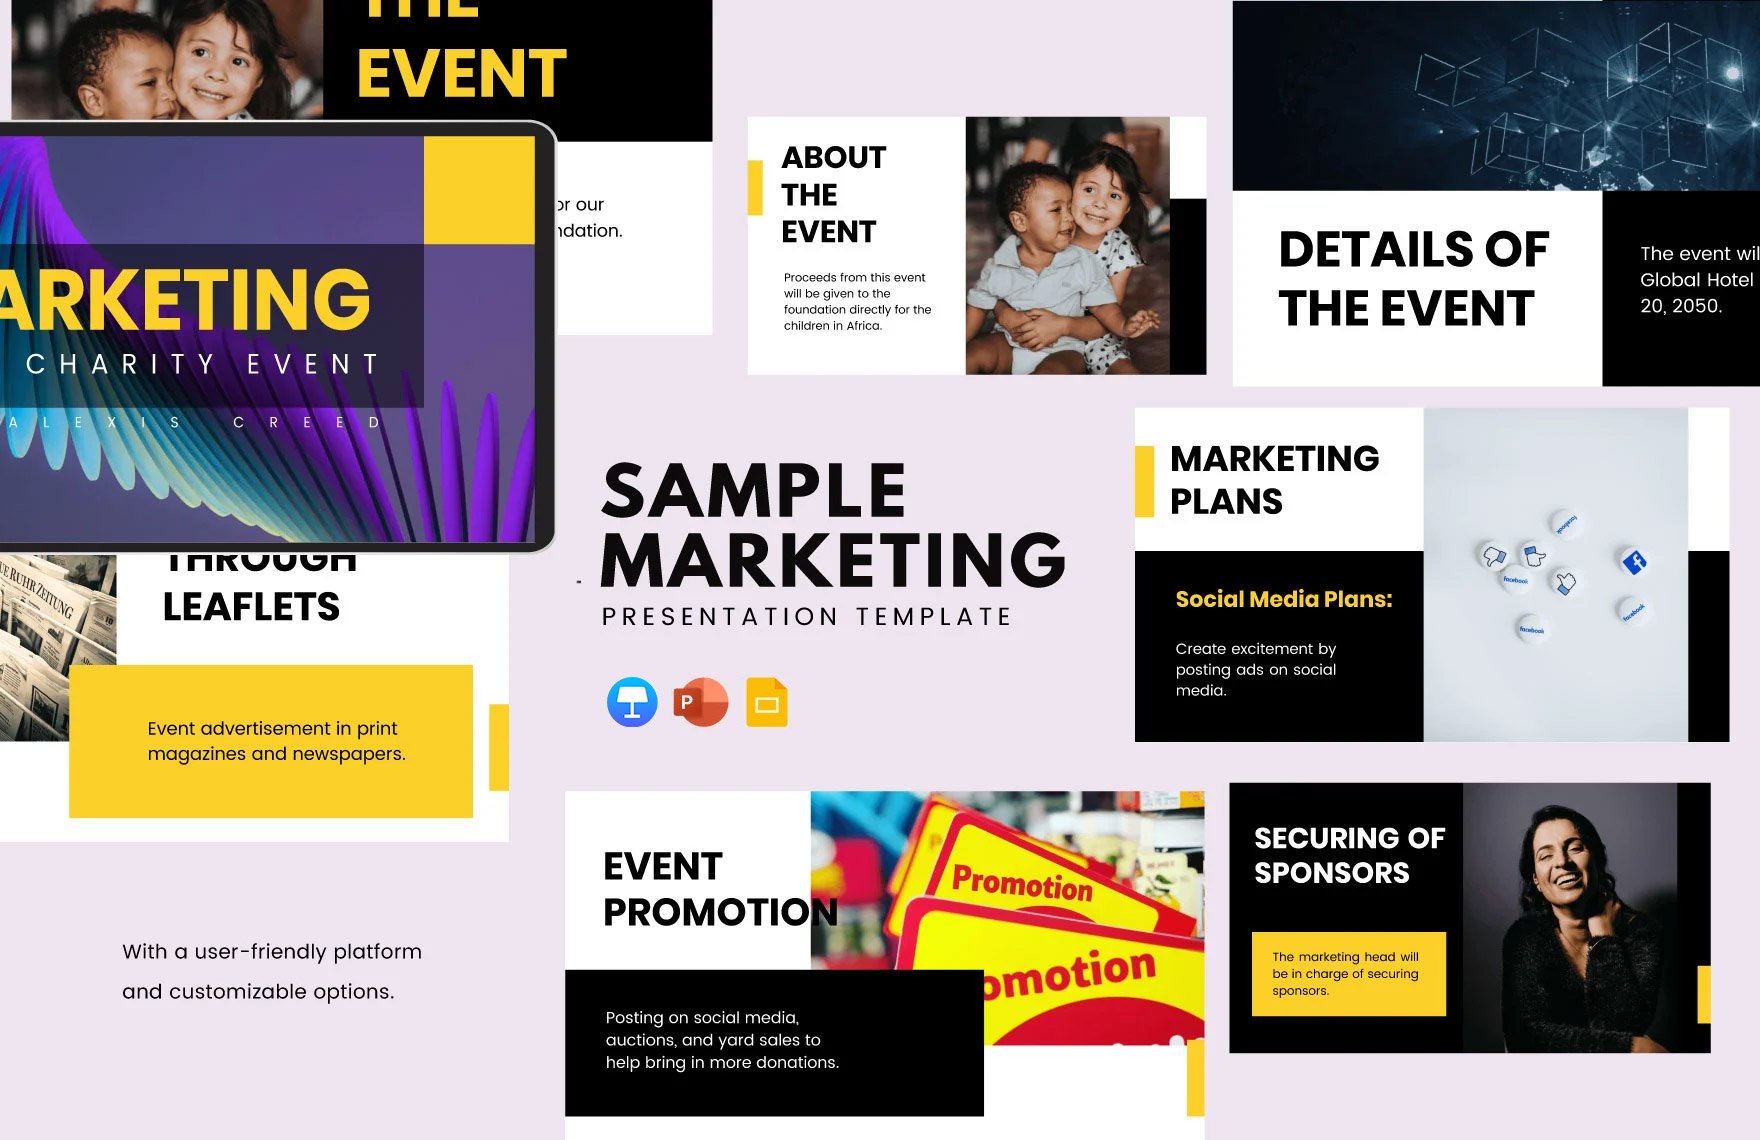 Sample Marketing Presentation Template